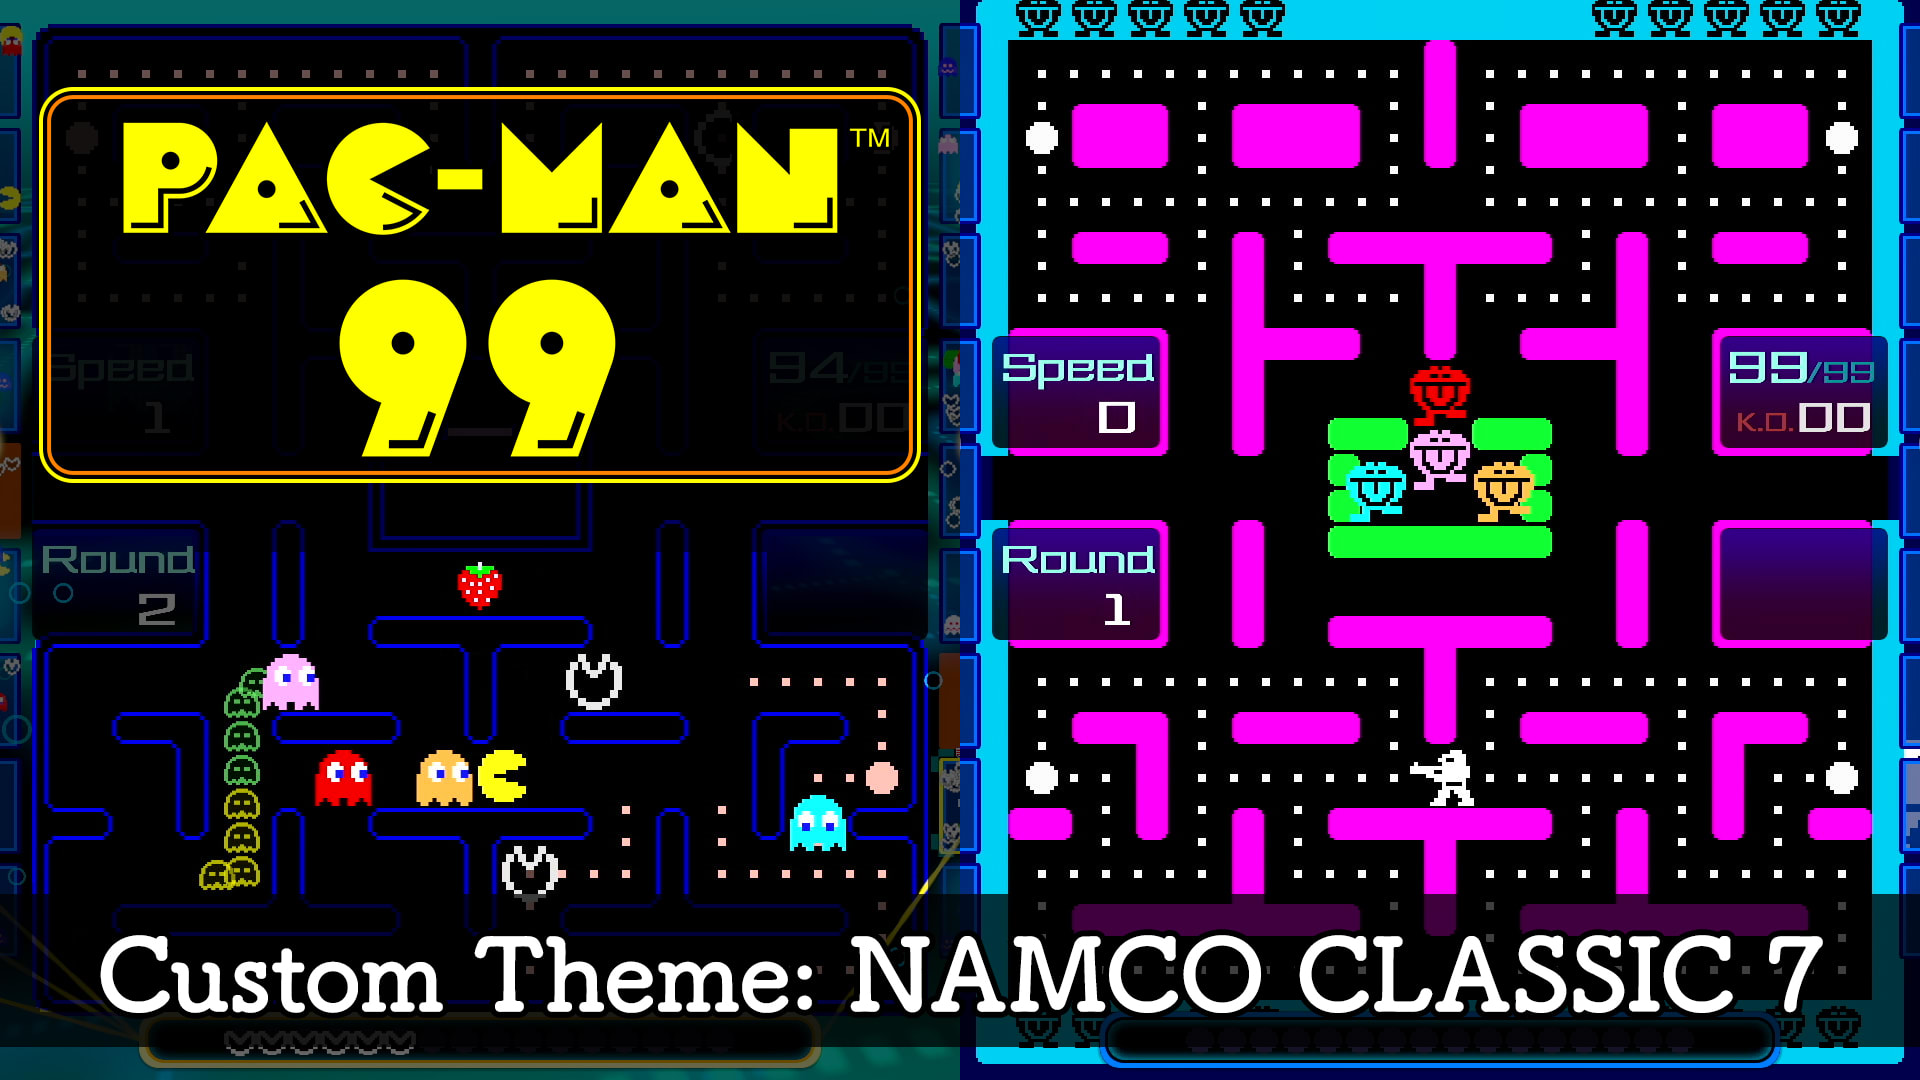 PAC-MAN™ 99 Custom Theme: NAMCO CLASSIC 7